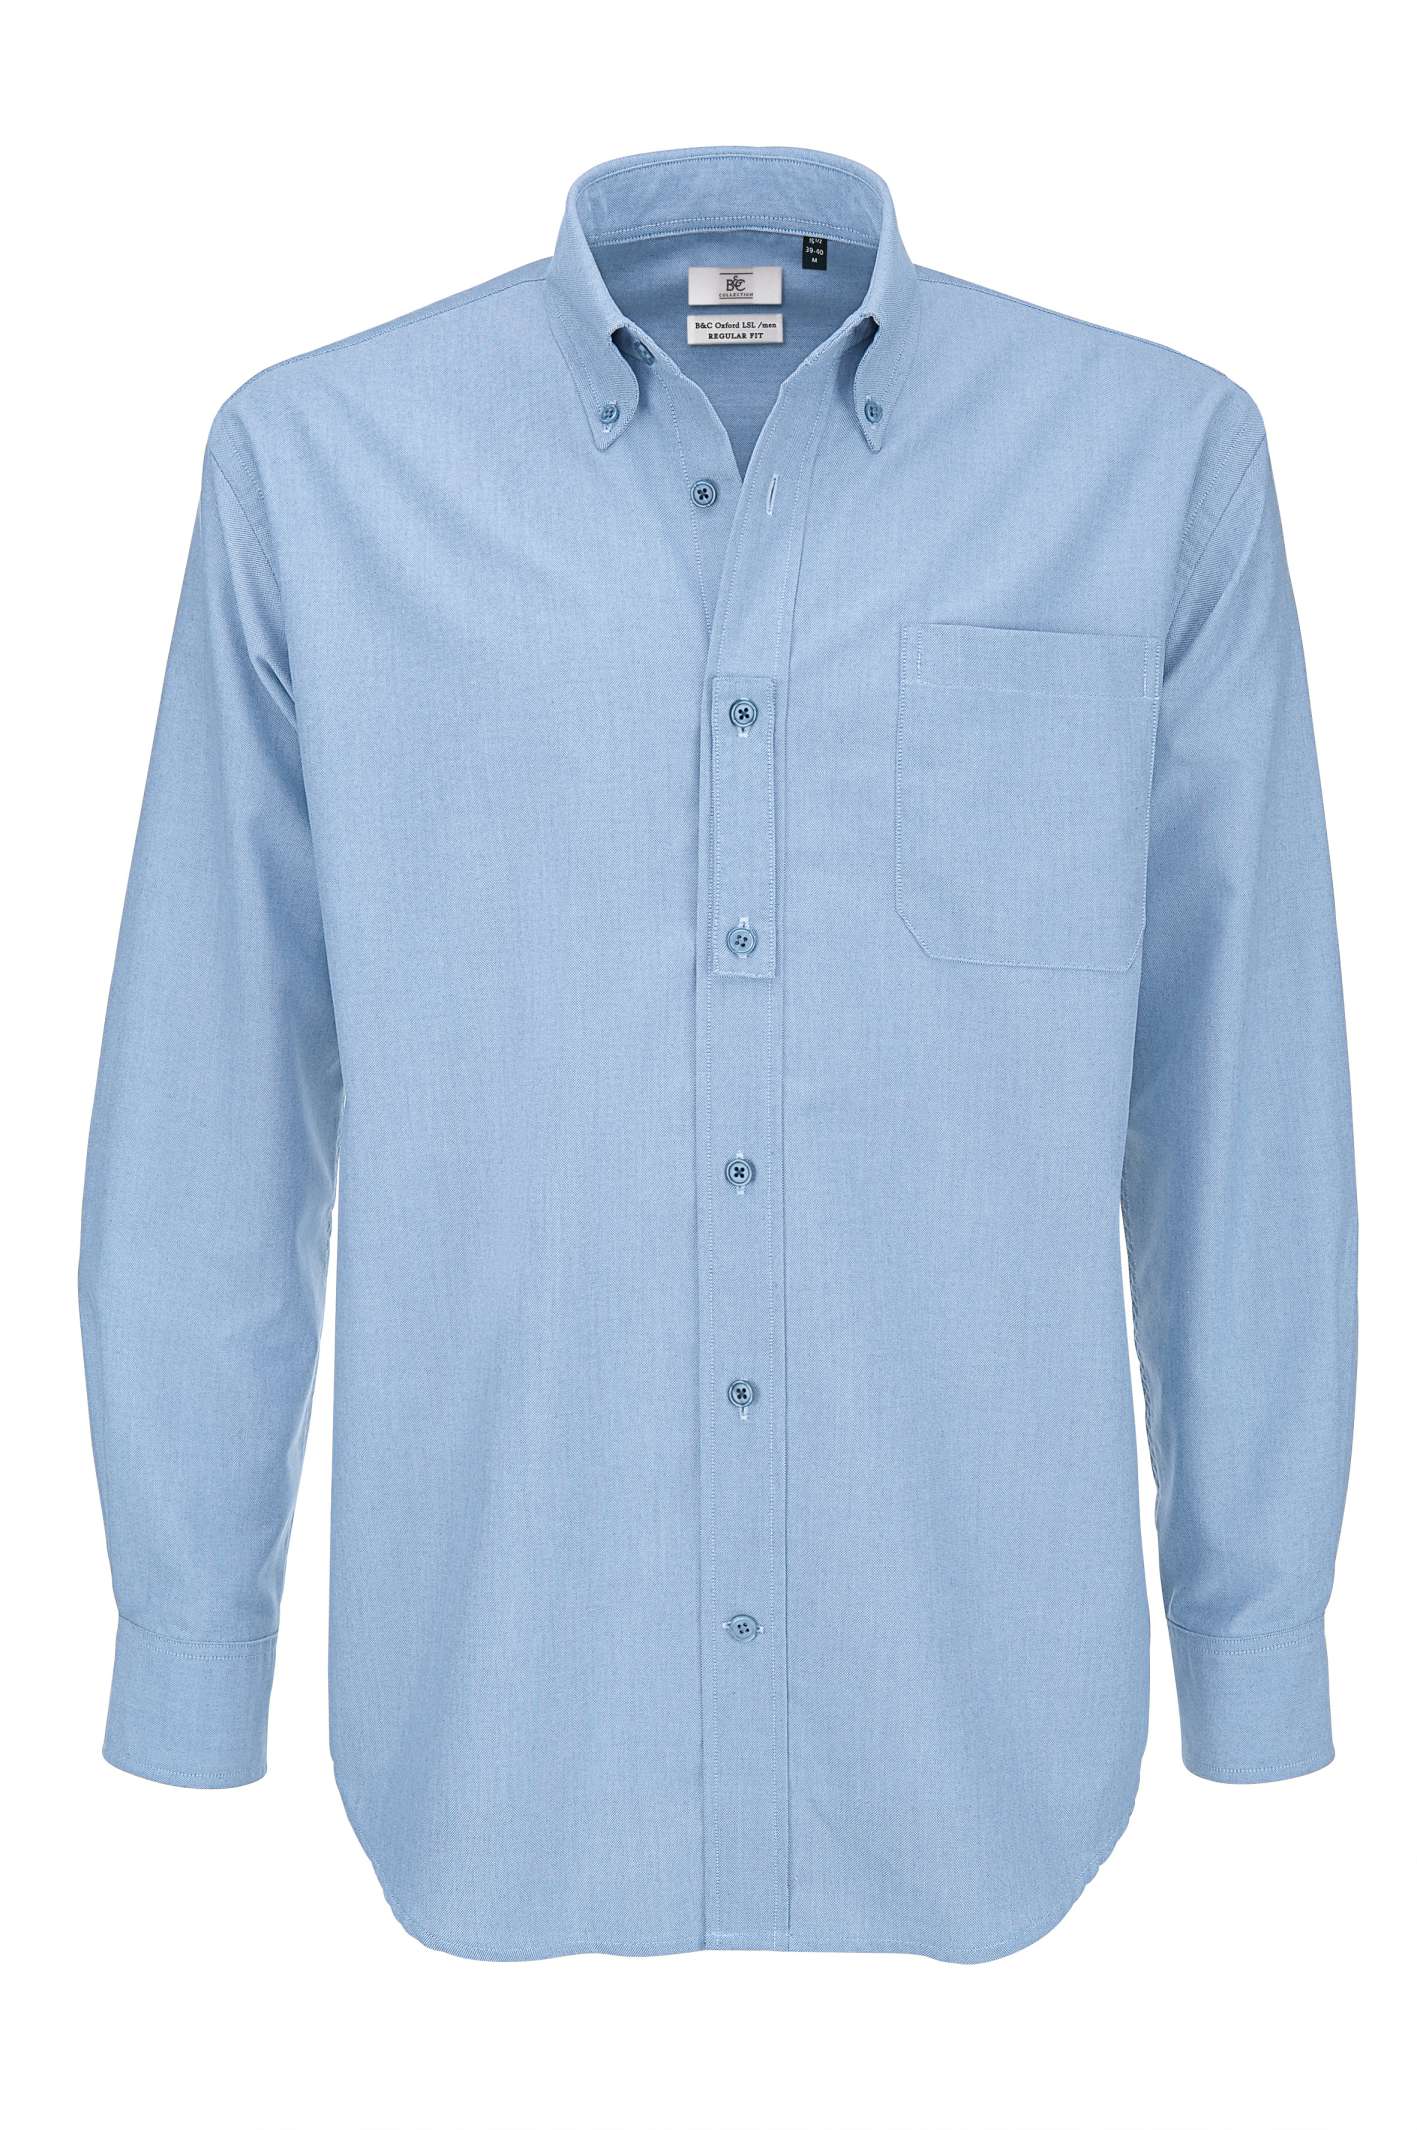 Мужские рубашки производители. Рубашка мужская Oxford OSTIN. Рубашка мужская Westland 1023 White Blue. Рубашка Оксфорд 164. Рубашка мужская с длинным рукавом Hans Ubbink.